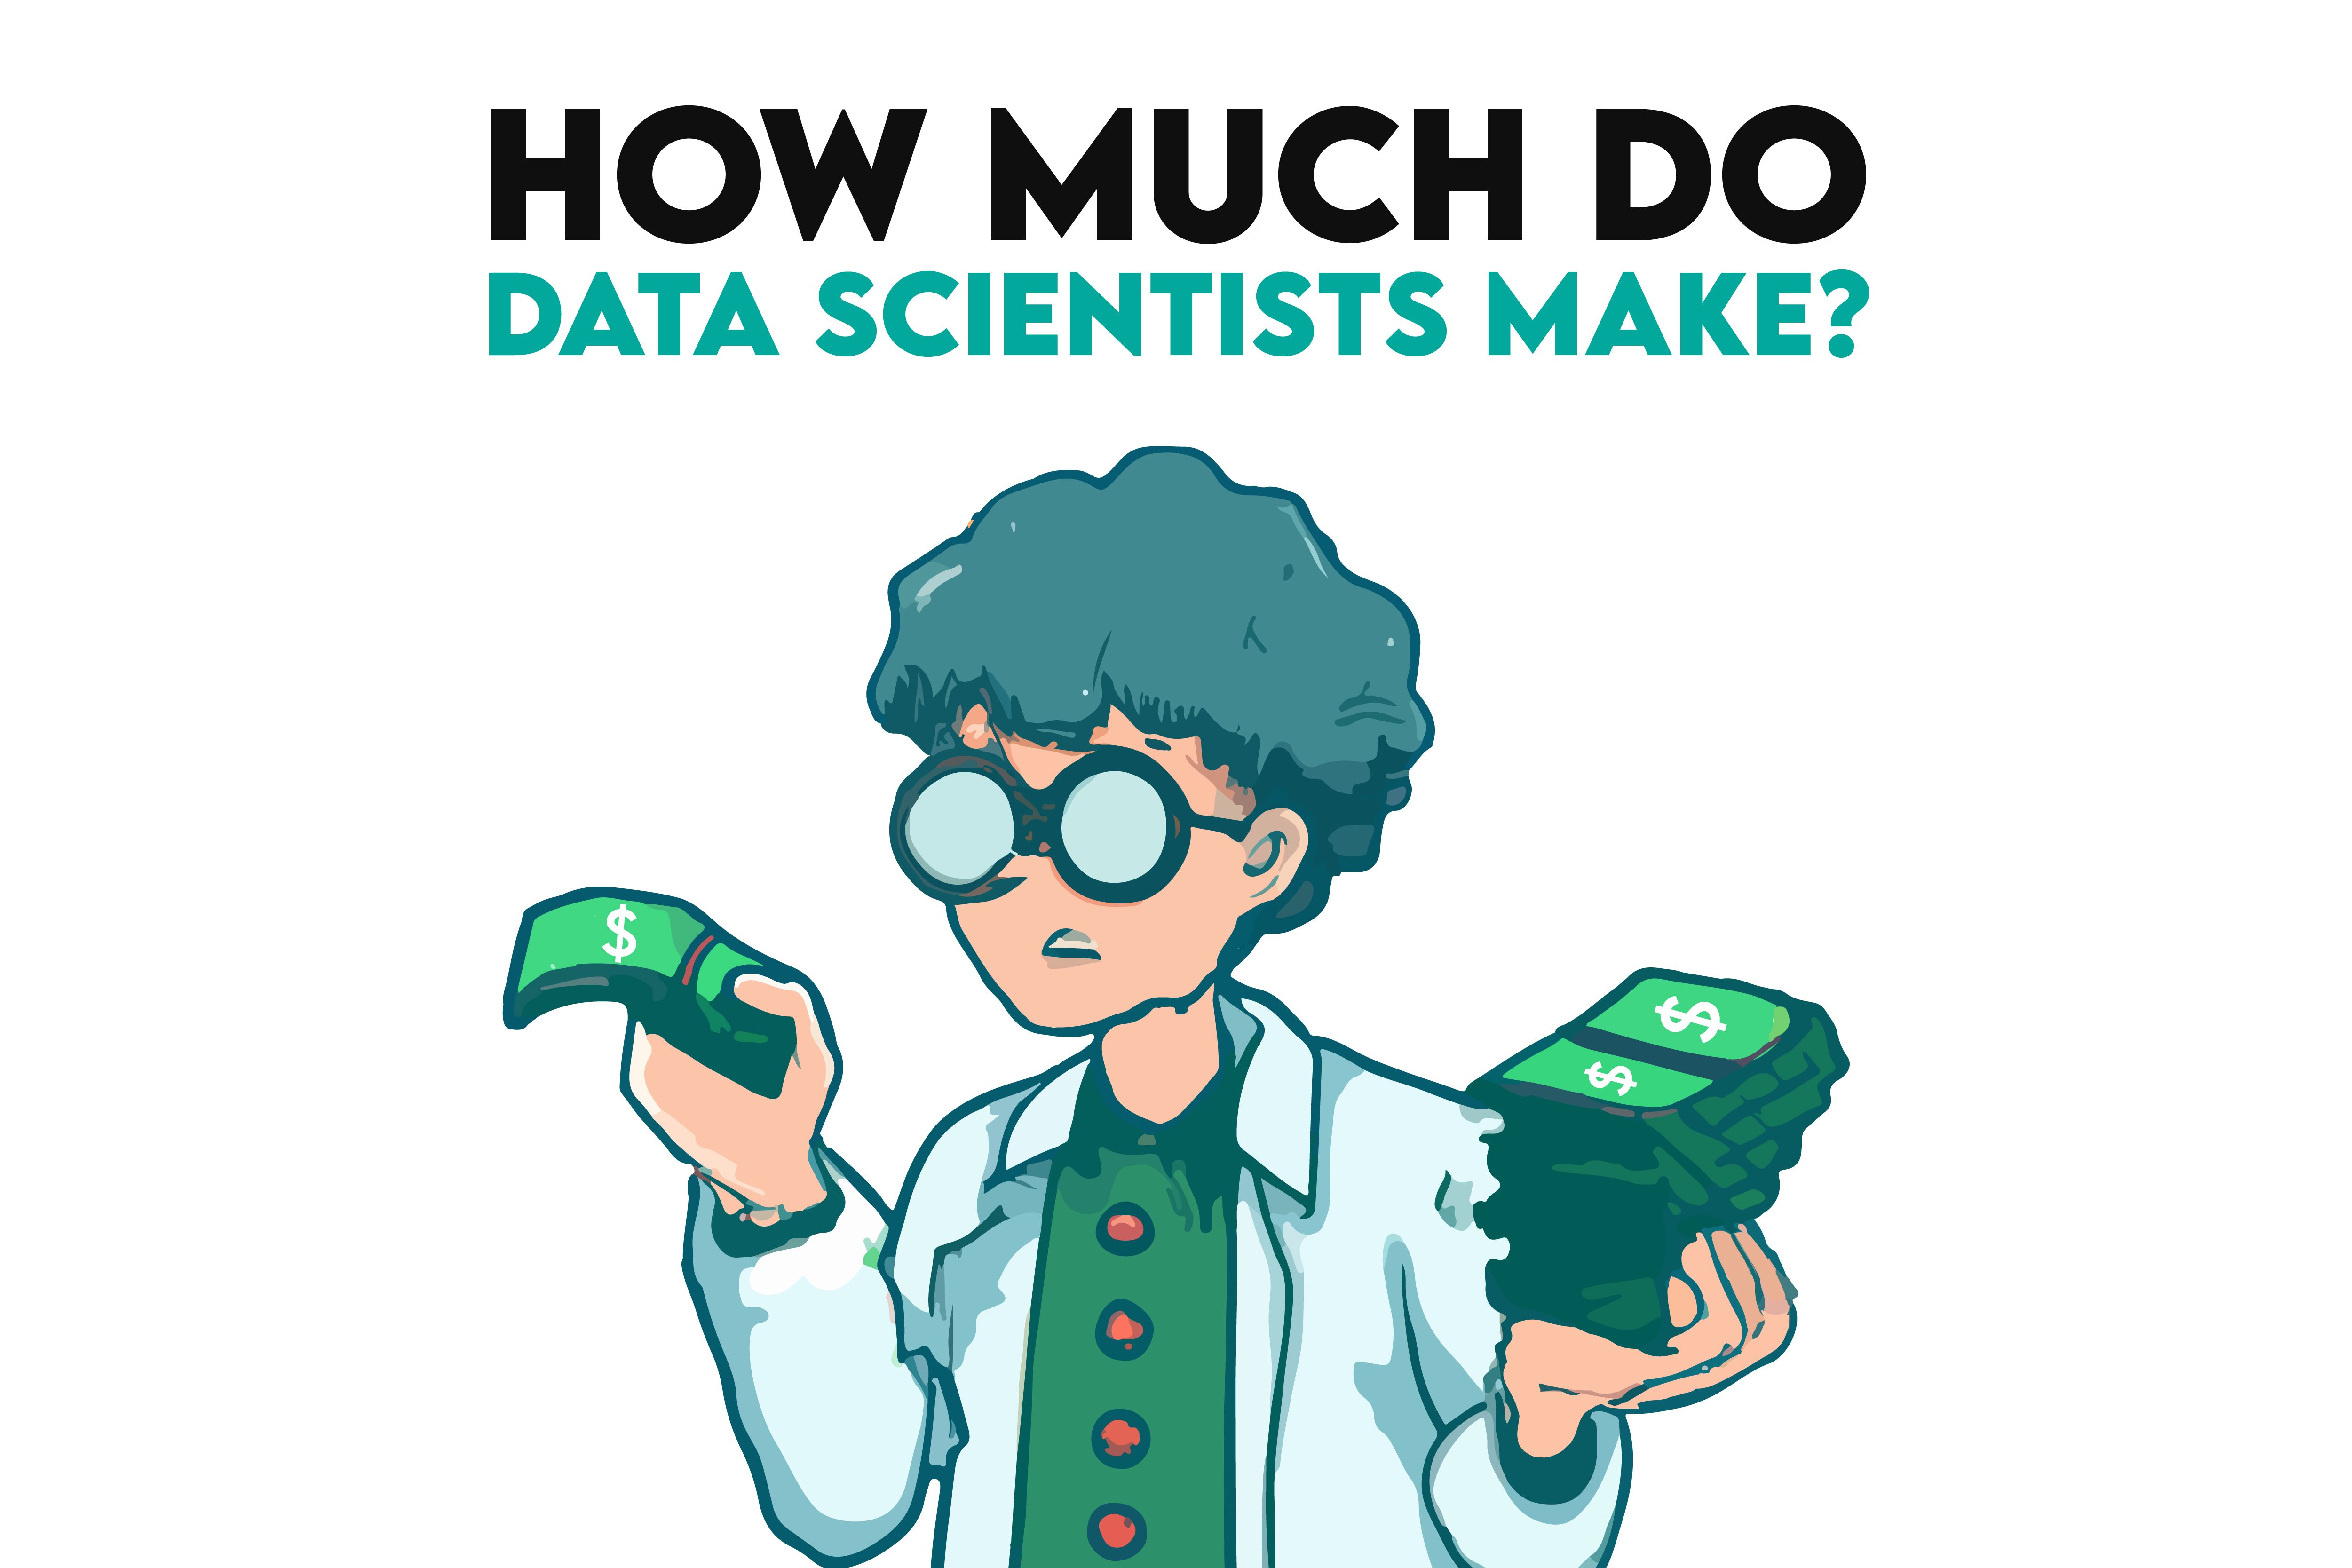 Data Scientist Salary